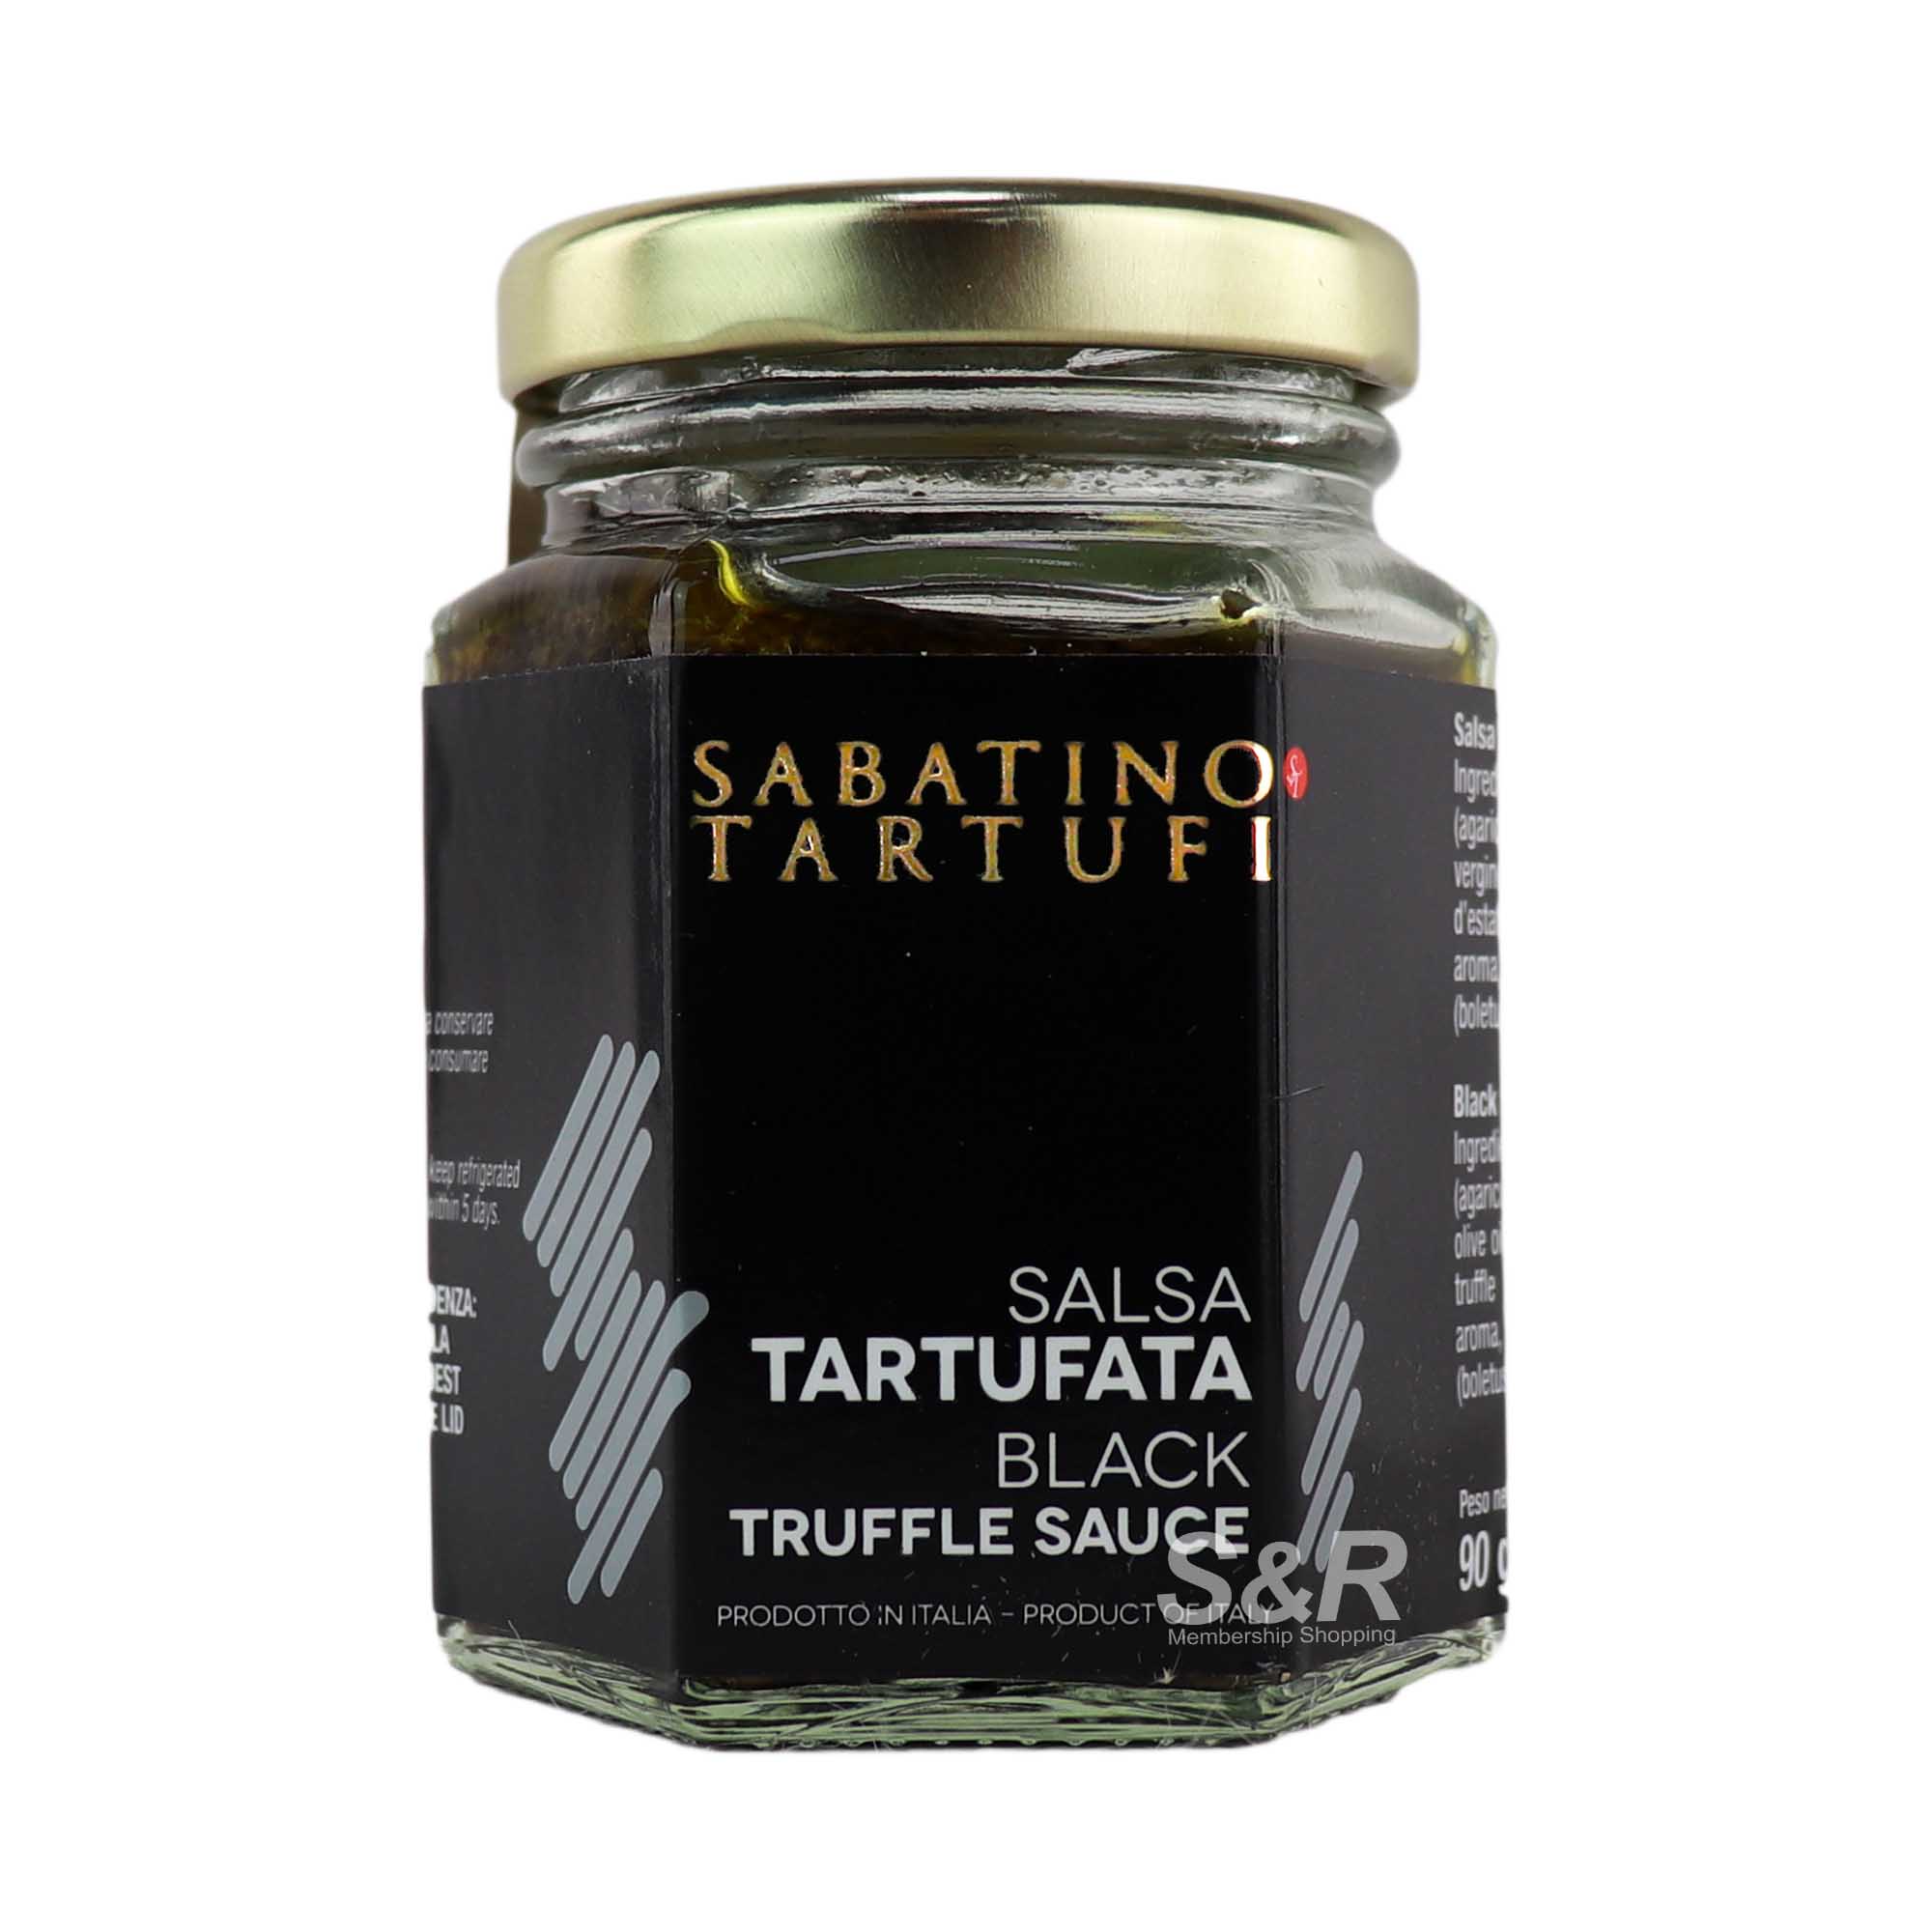 Sabatino Tartufi Black Truffle Sauce 90g